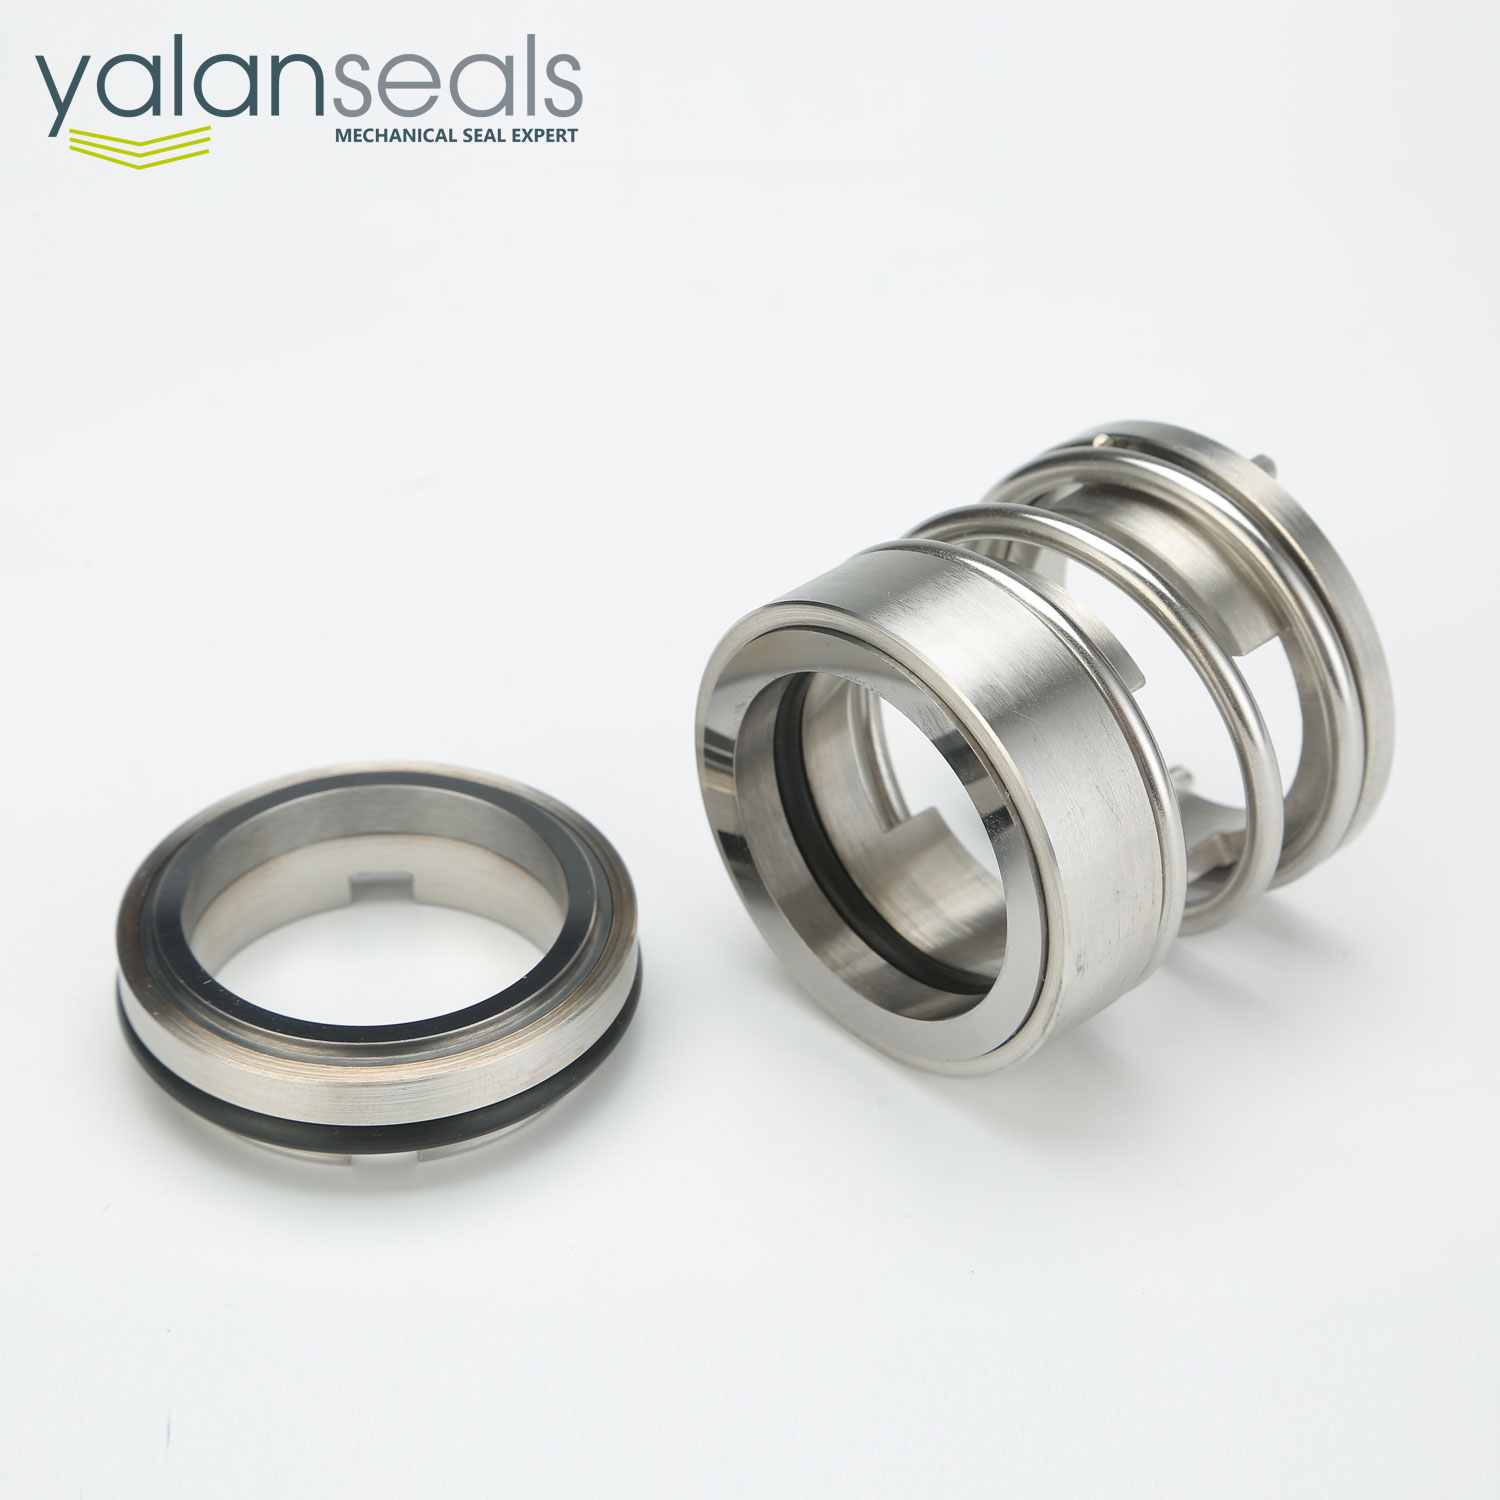 YALAN 113 Single Spring Mechanical Seal for Waste Water Pumps